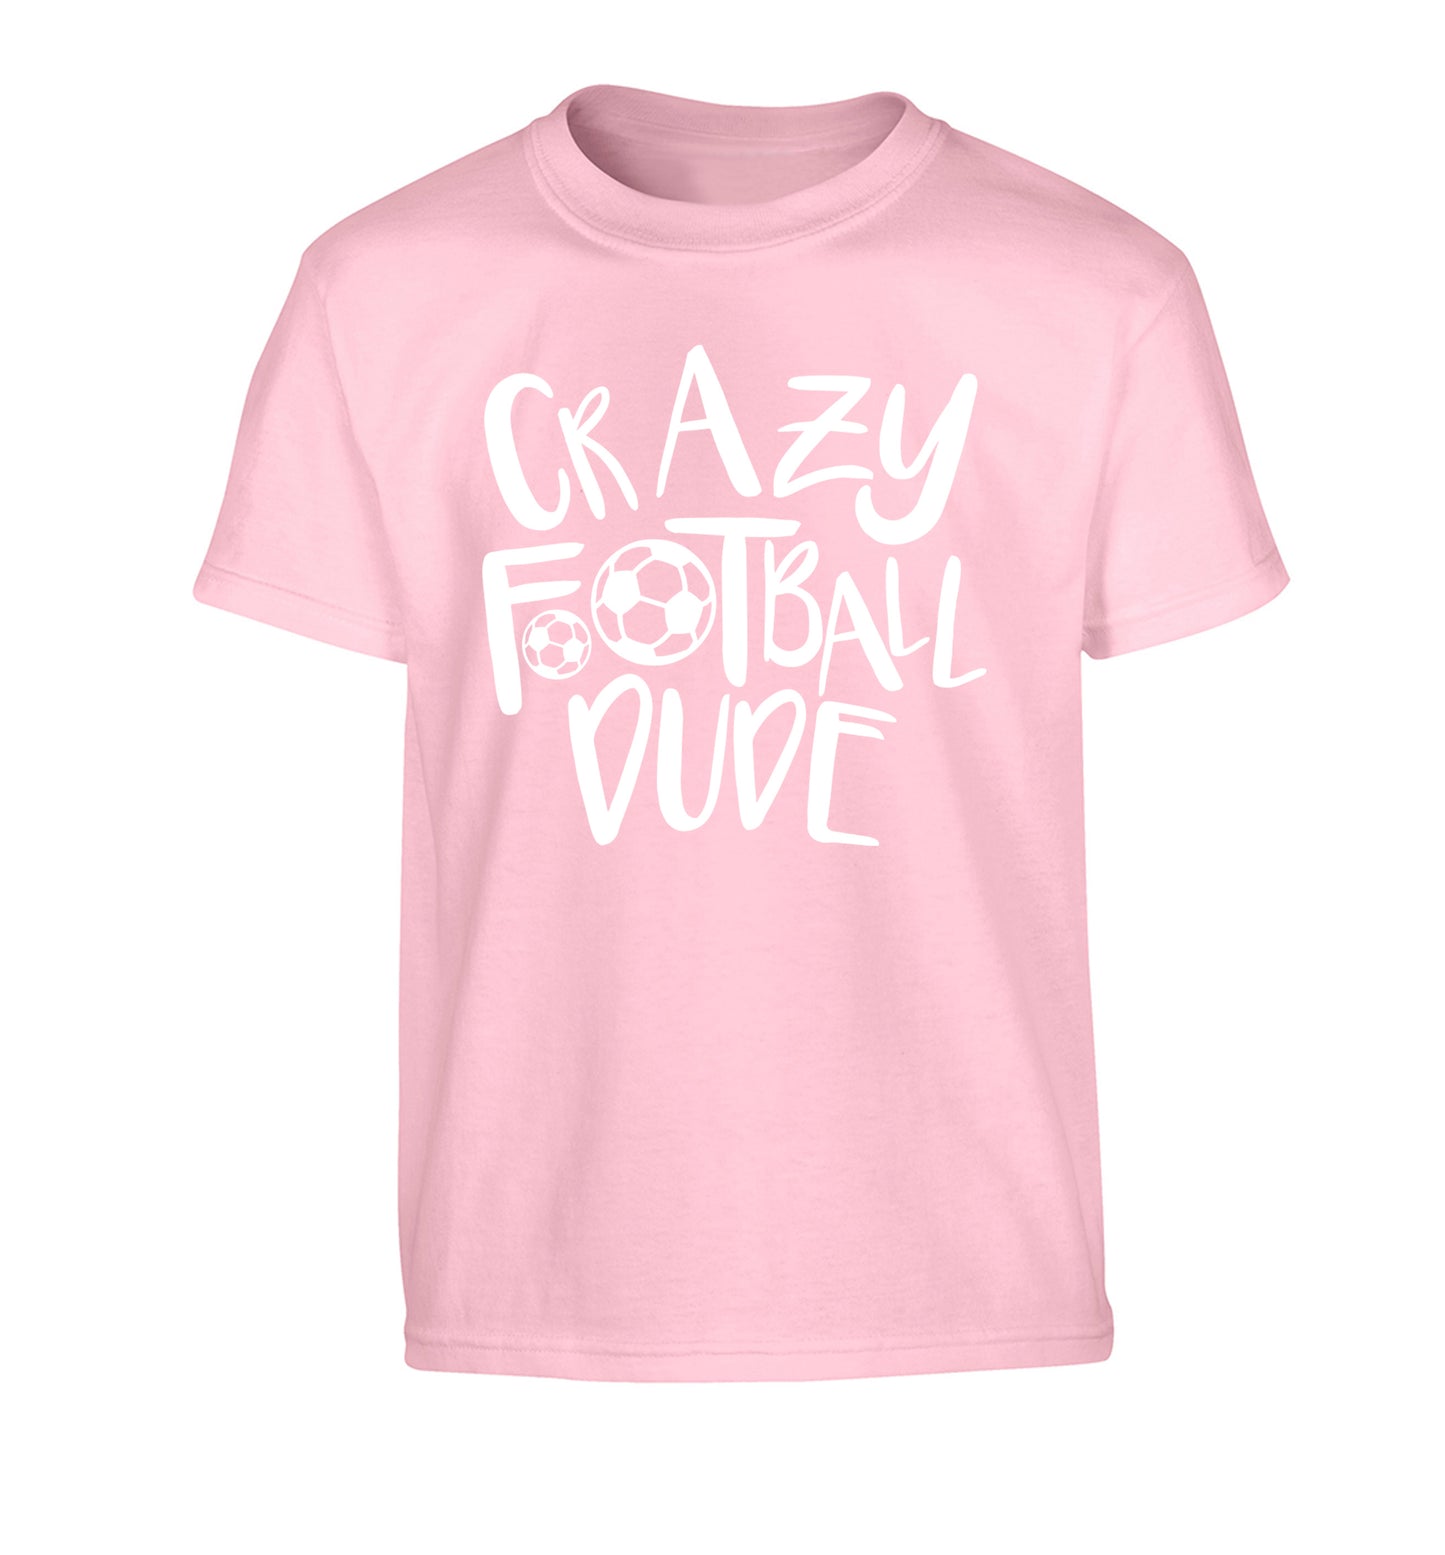 Crazy football dude Children's light pink Tshirt 12-14 Years